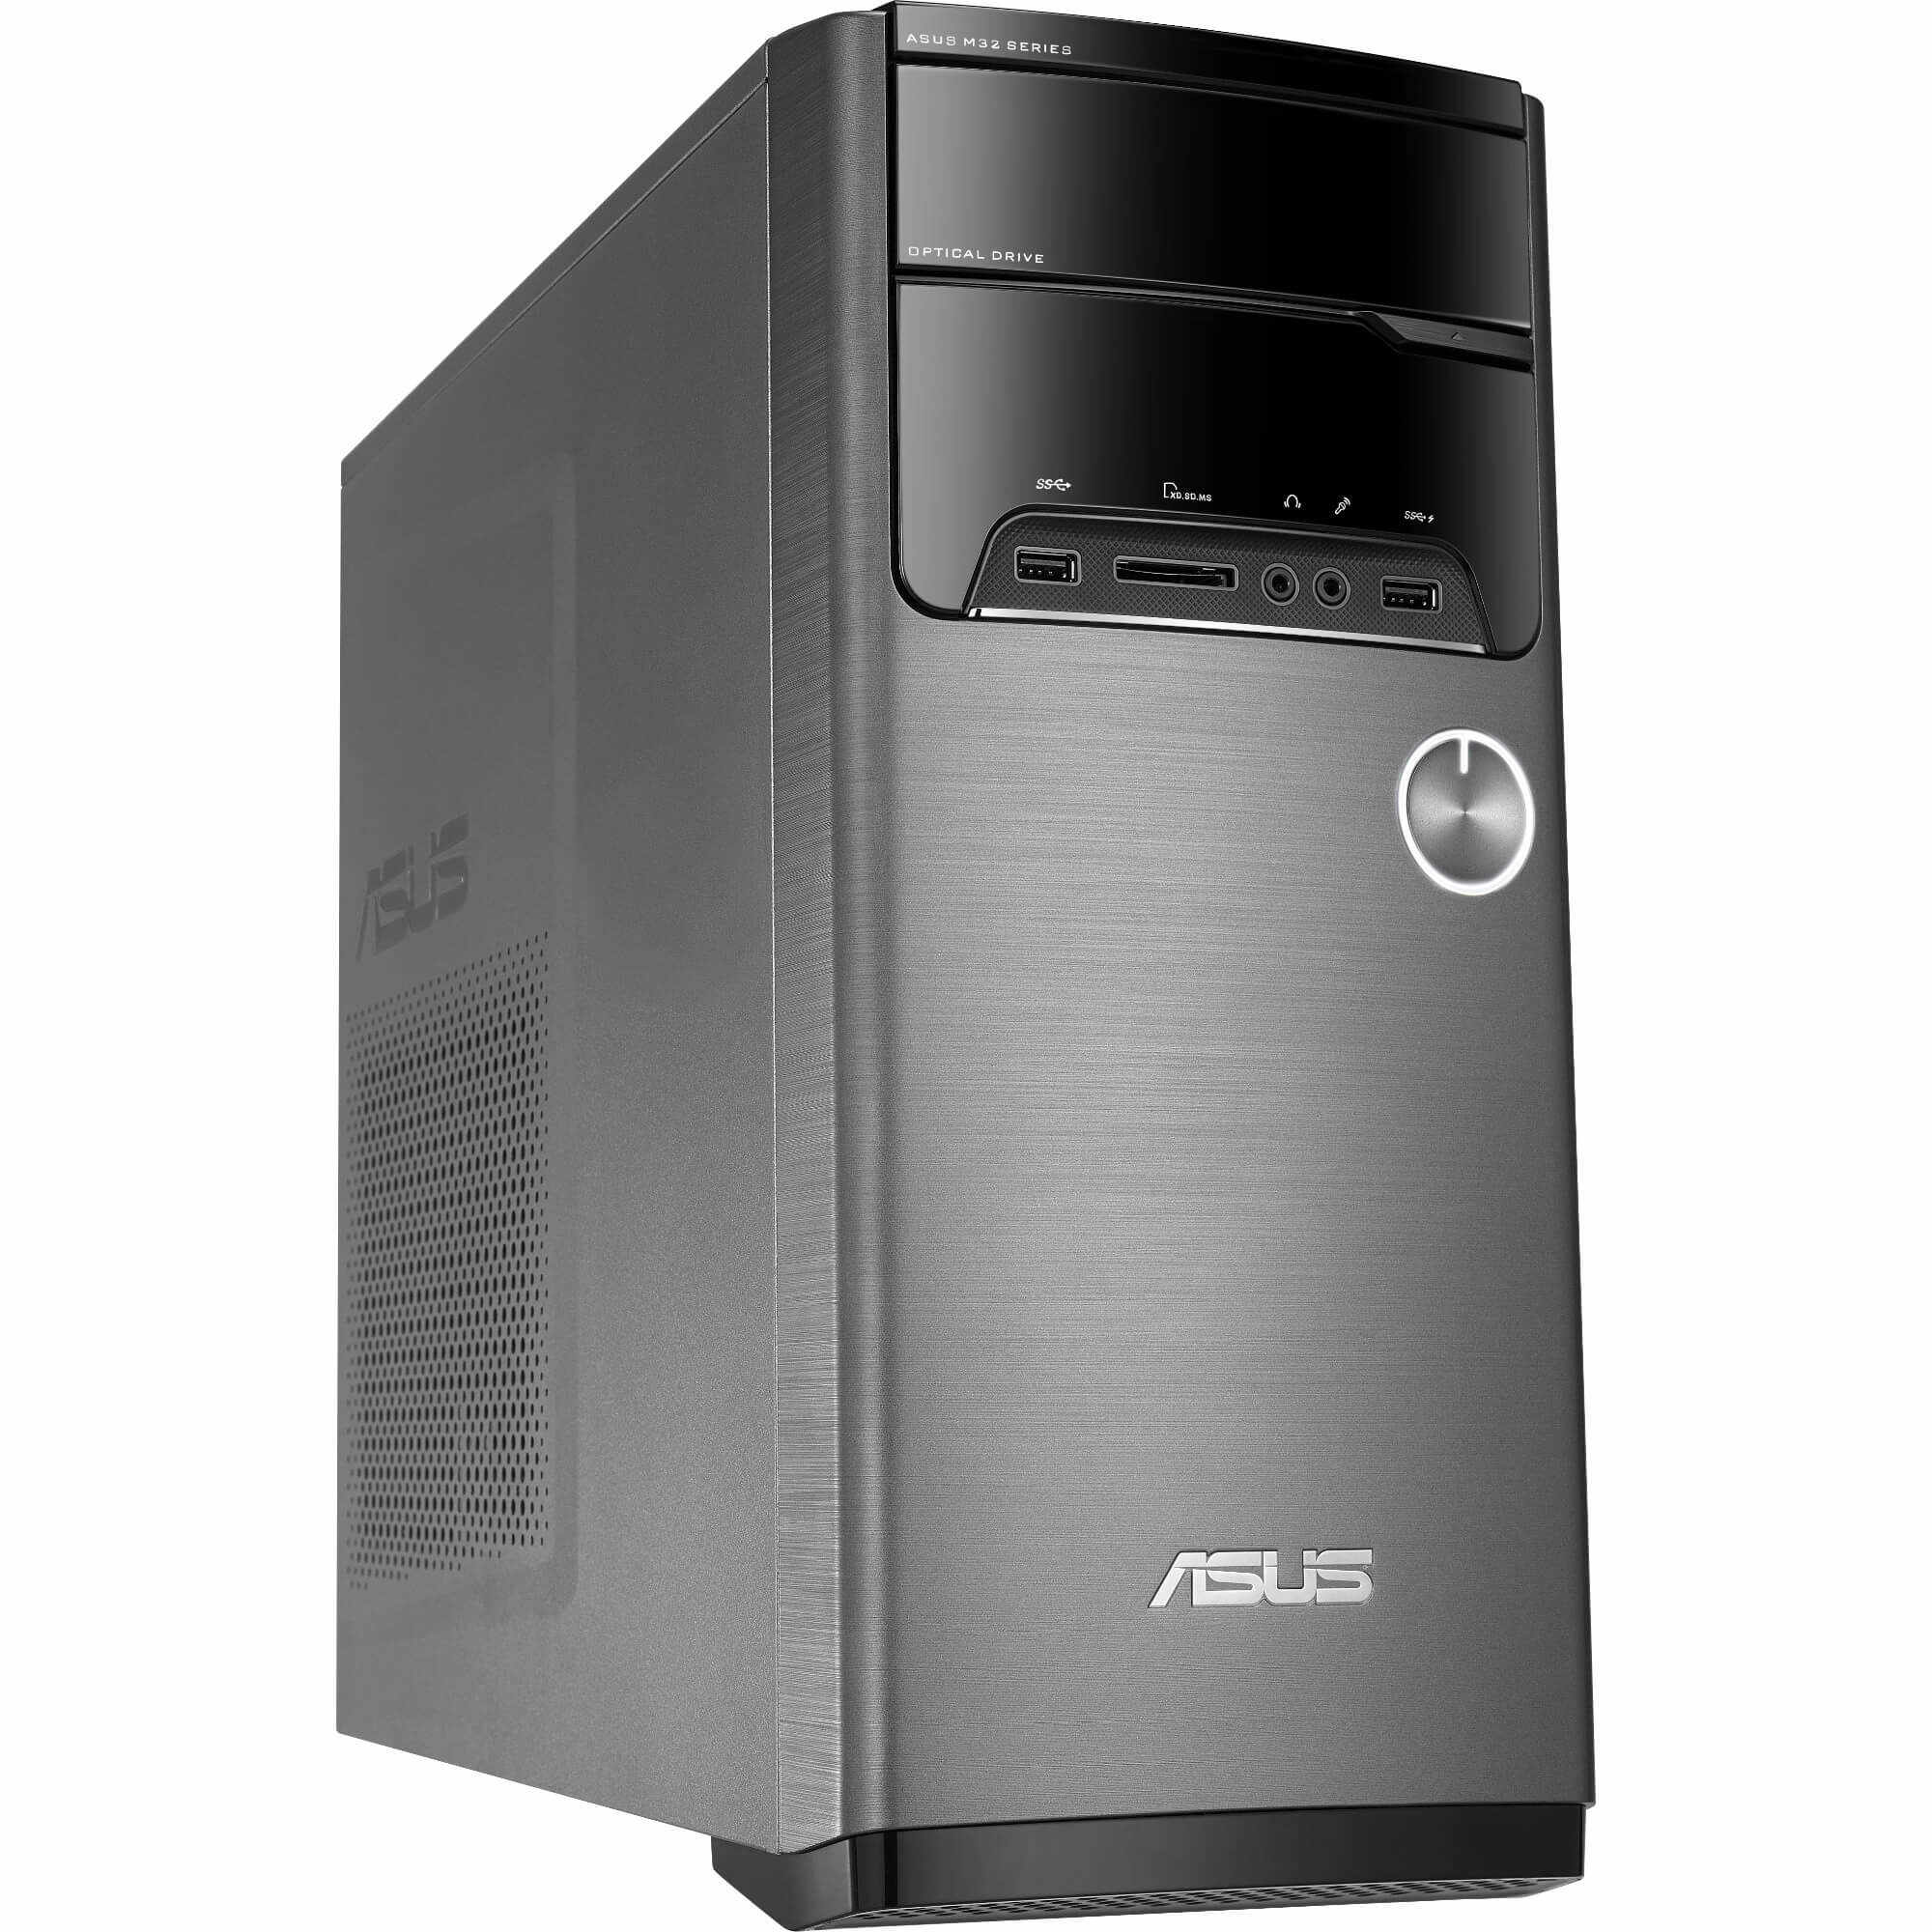 Sistem Desktop PC ASUS M32CD-K-RO003D, Intel Core i5-7400, 8GB DDR4, HDD 2TB, nVidia GeForce GTX 1050 2GB, Free DOS